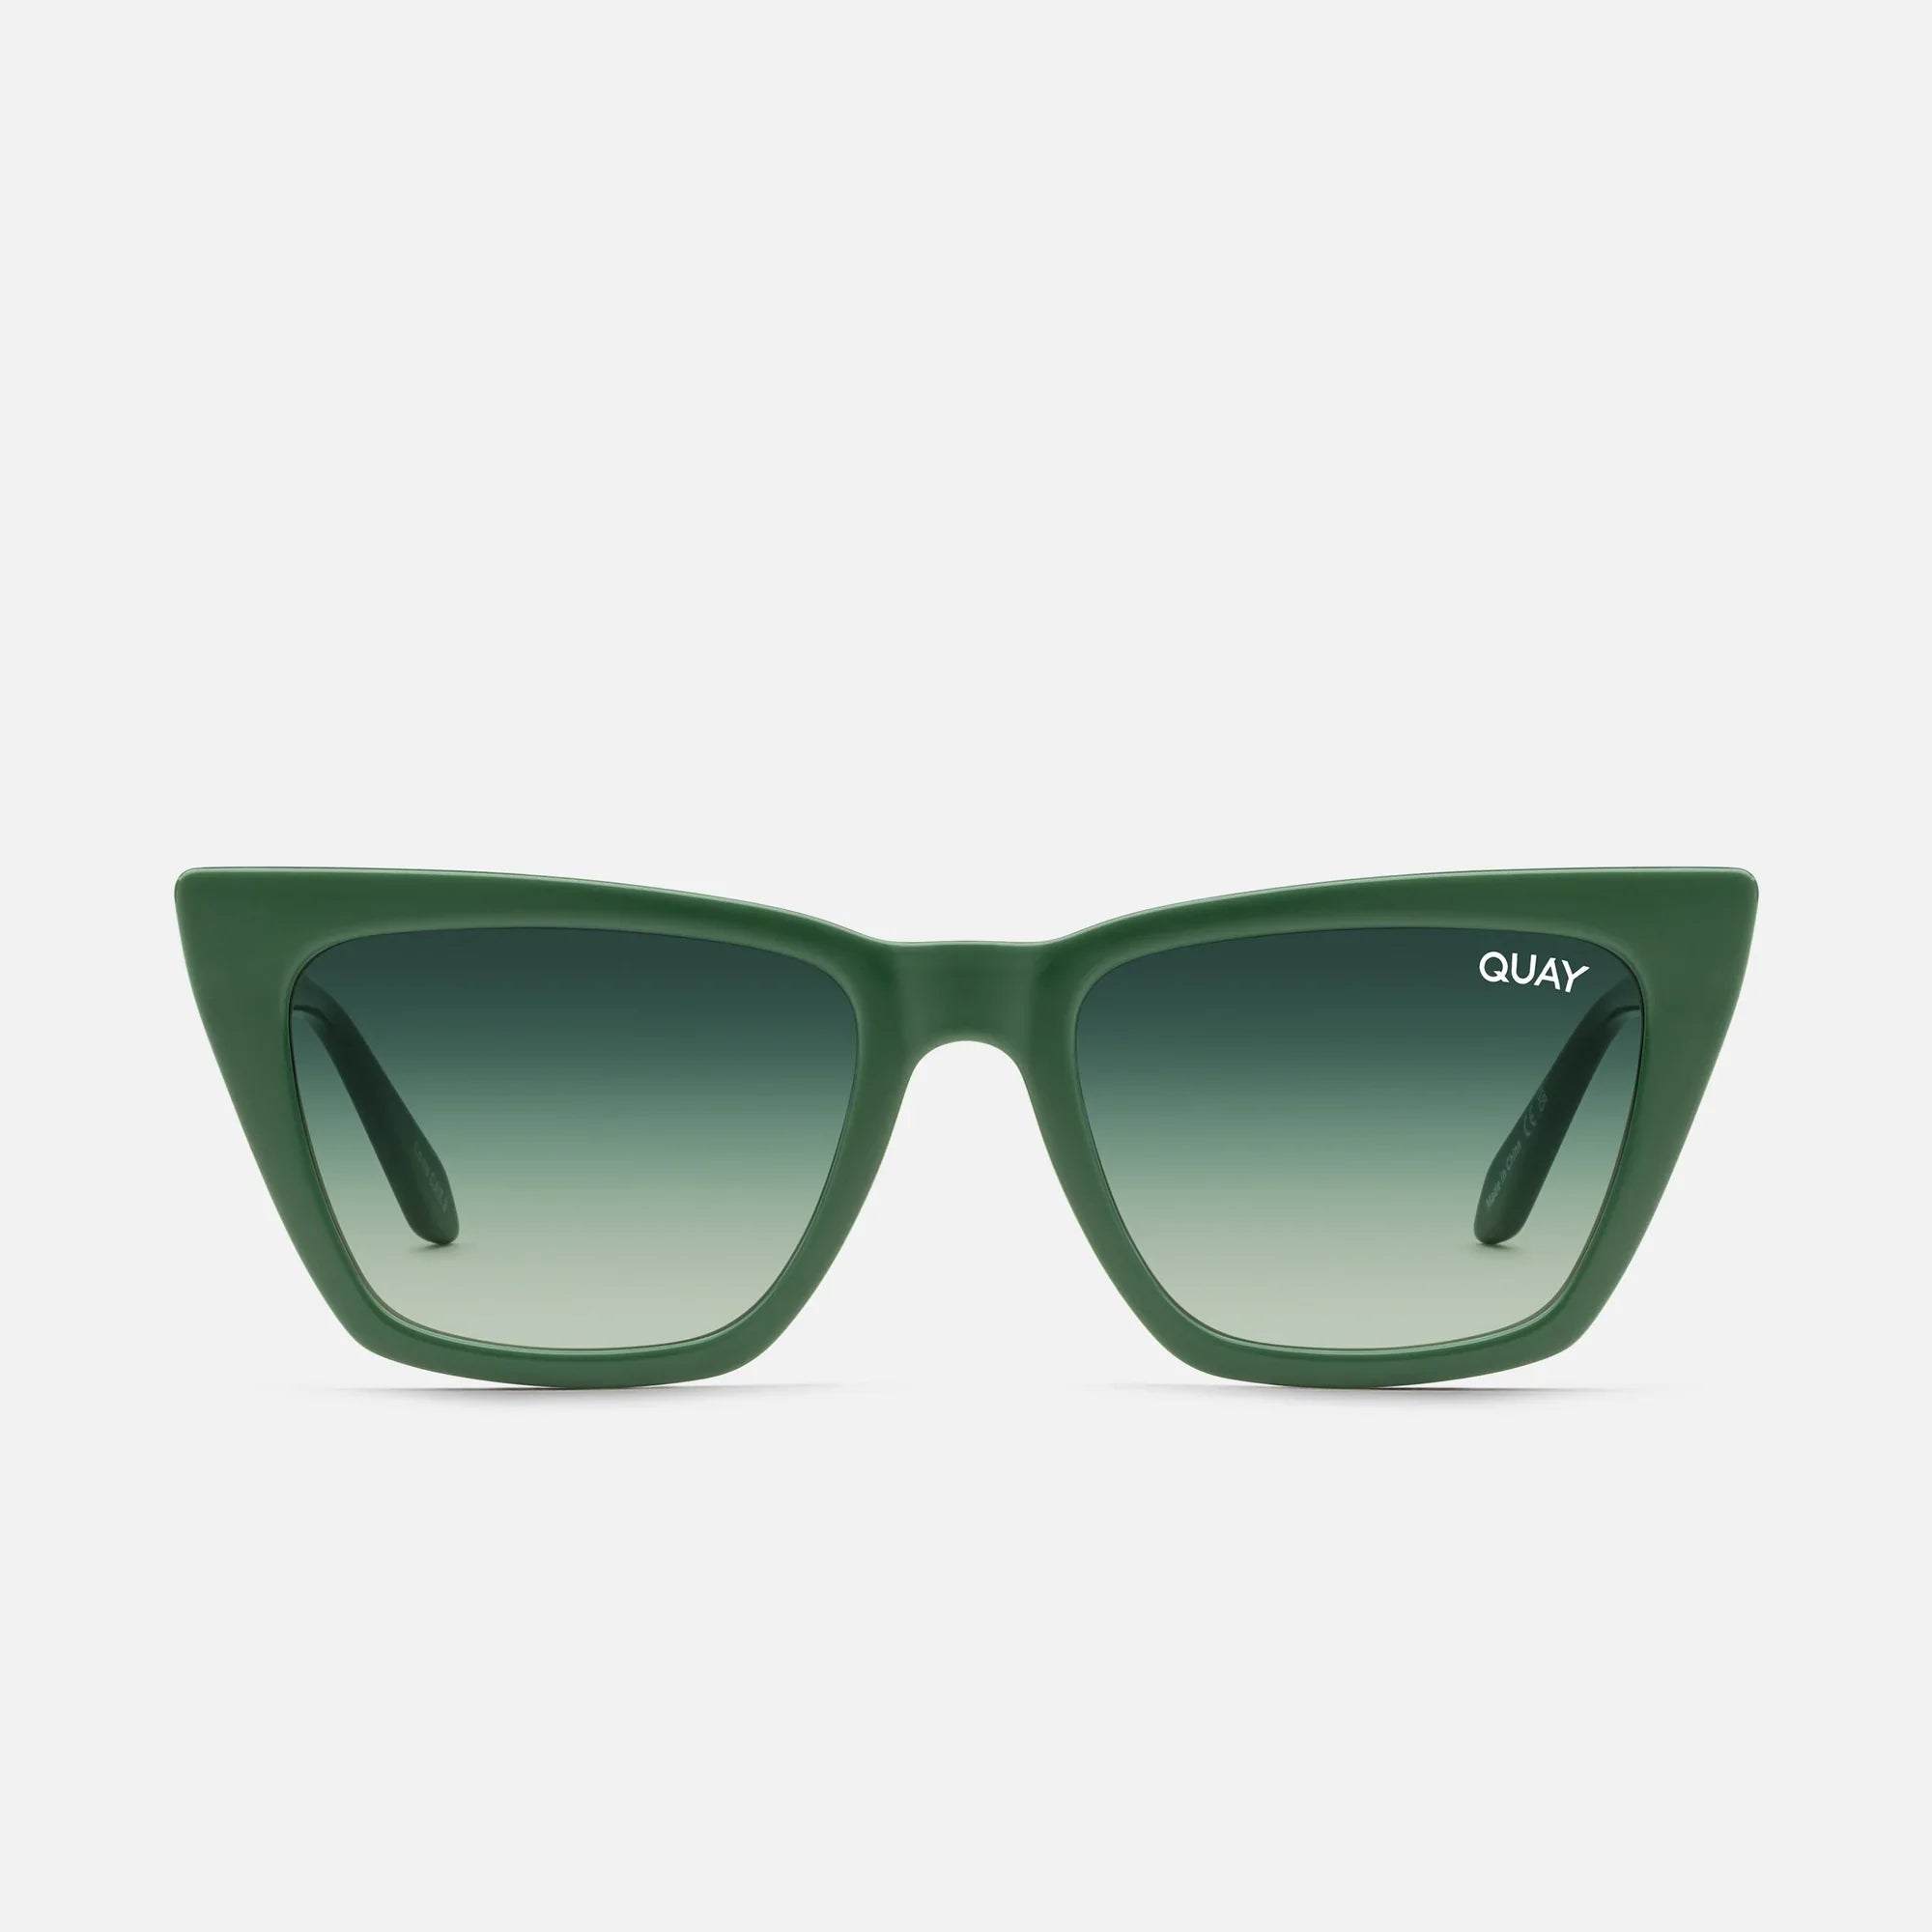 QUAY Sunglasses - Call The Shots - Monstera/ Green